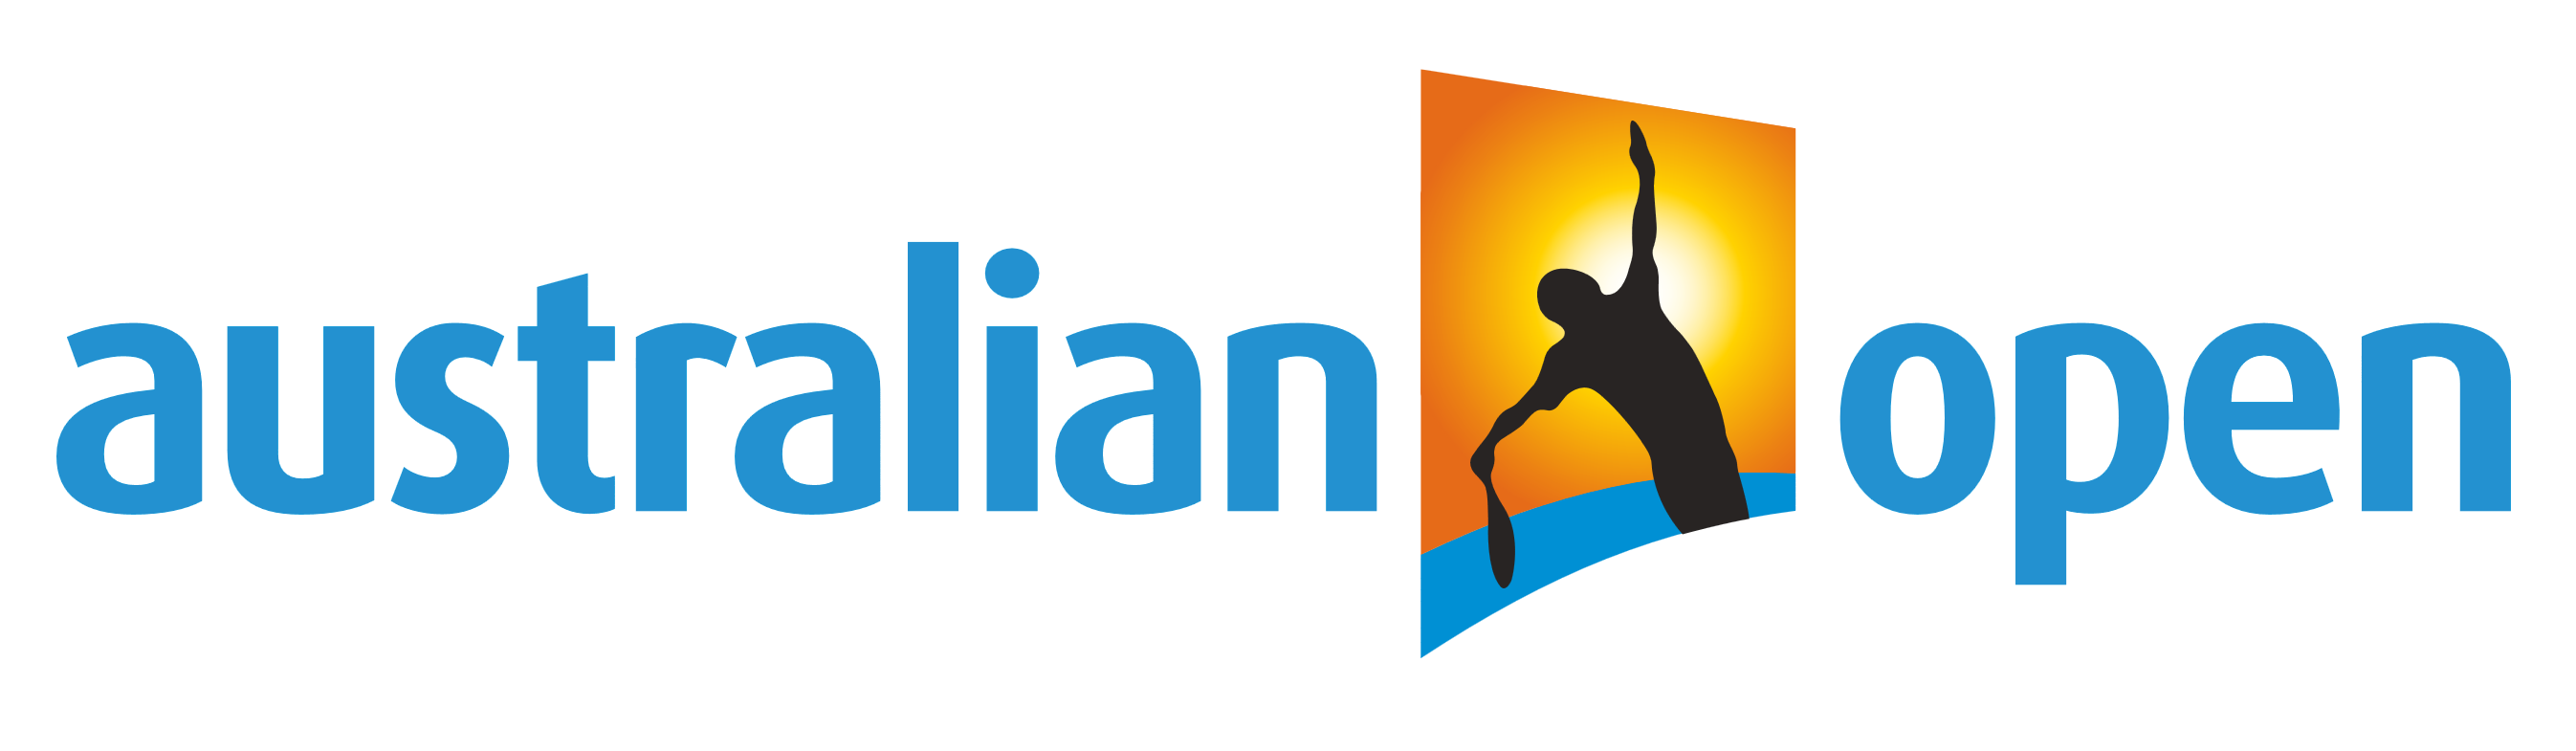 Australian Open Logos